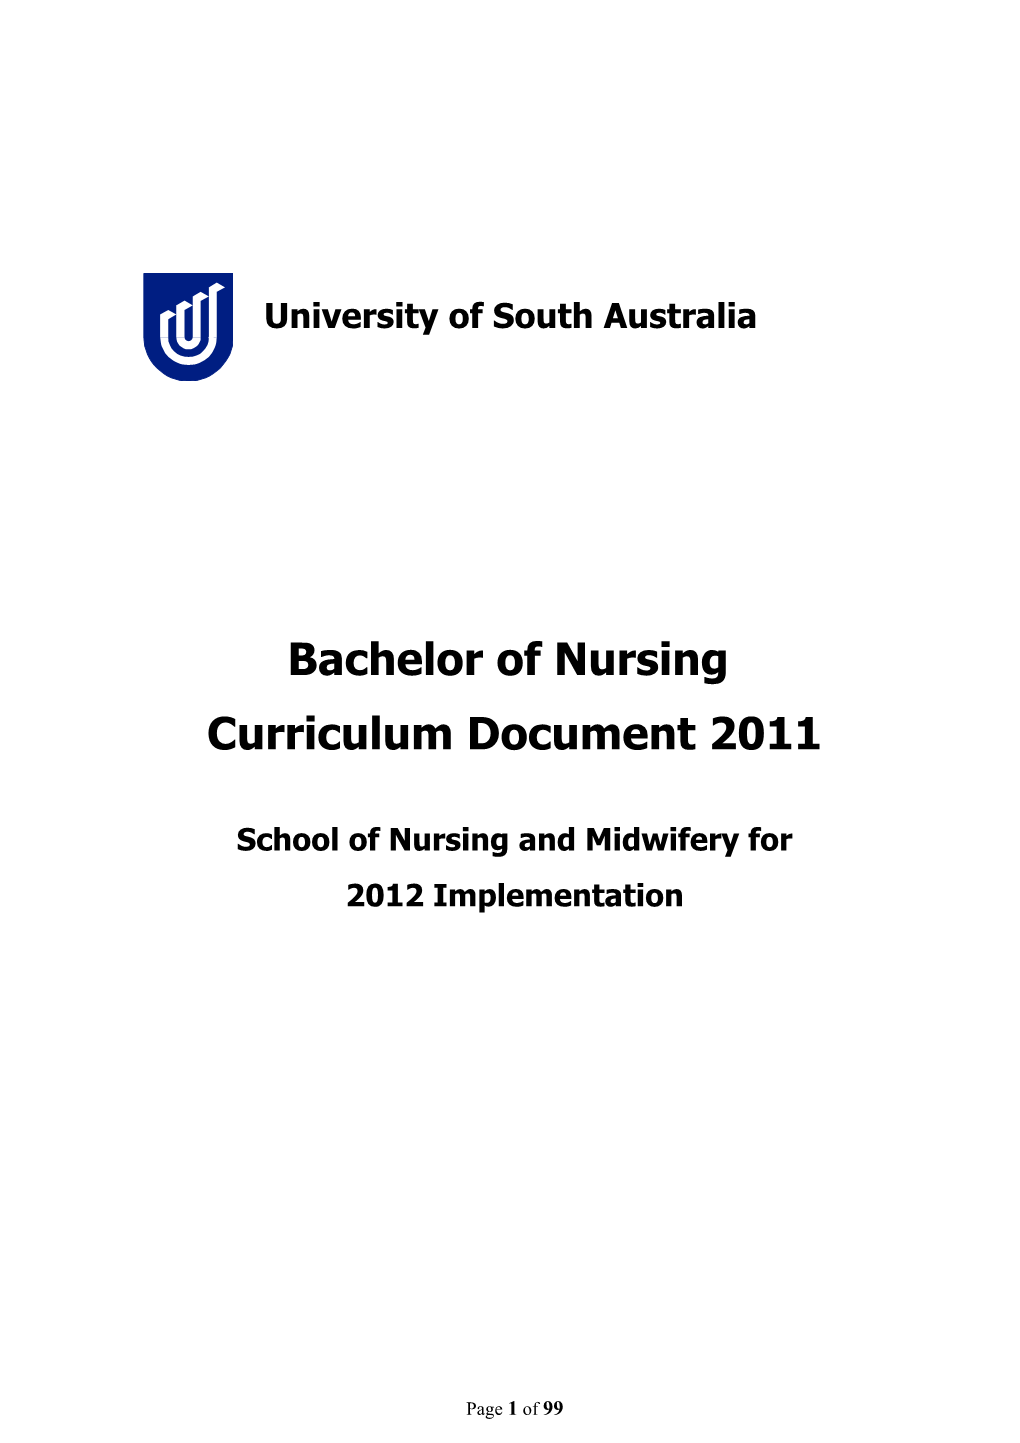 Appendix10 Bachelor of Nursing Curriculum Document 2011